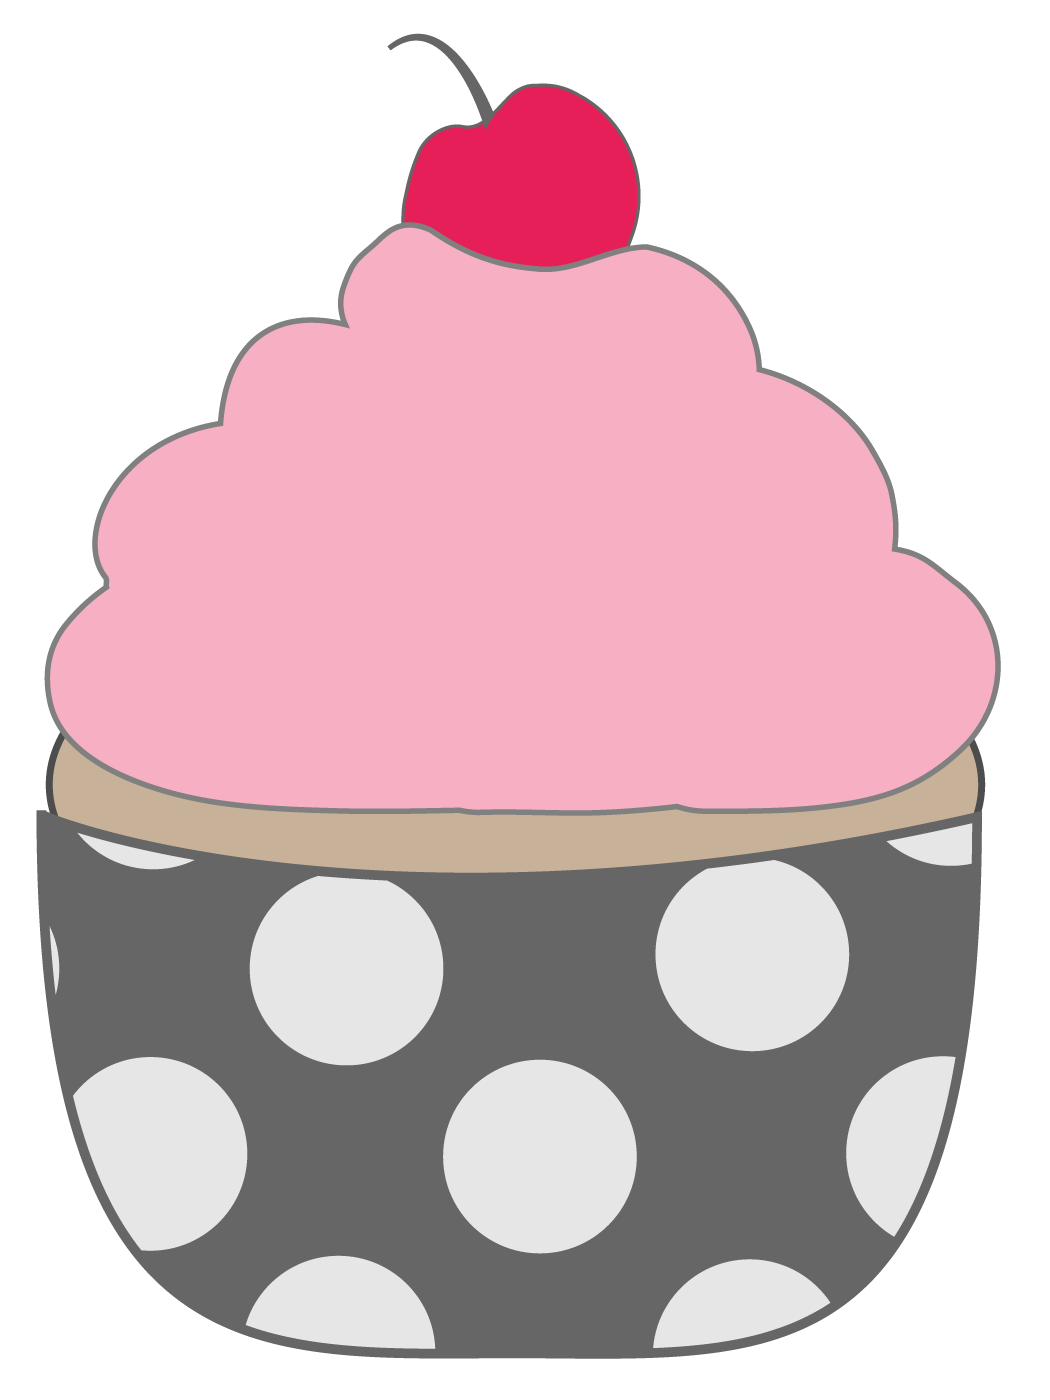 free clipart cupcake